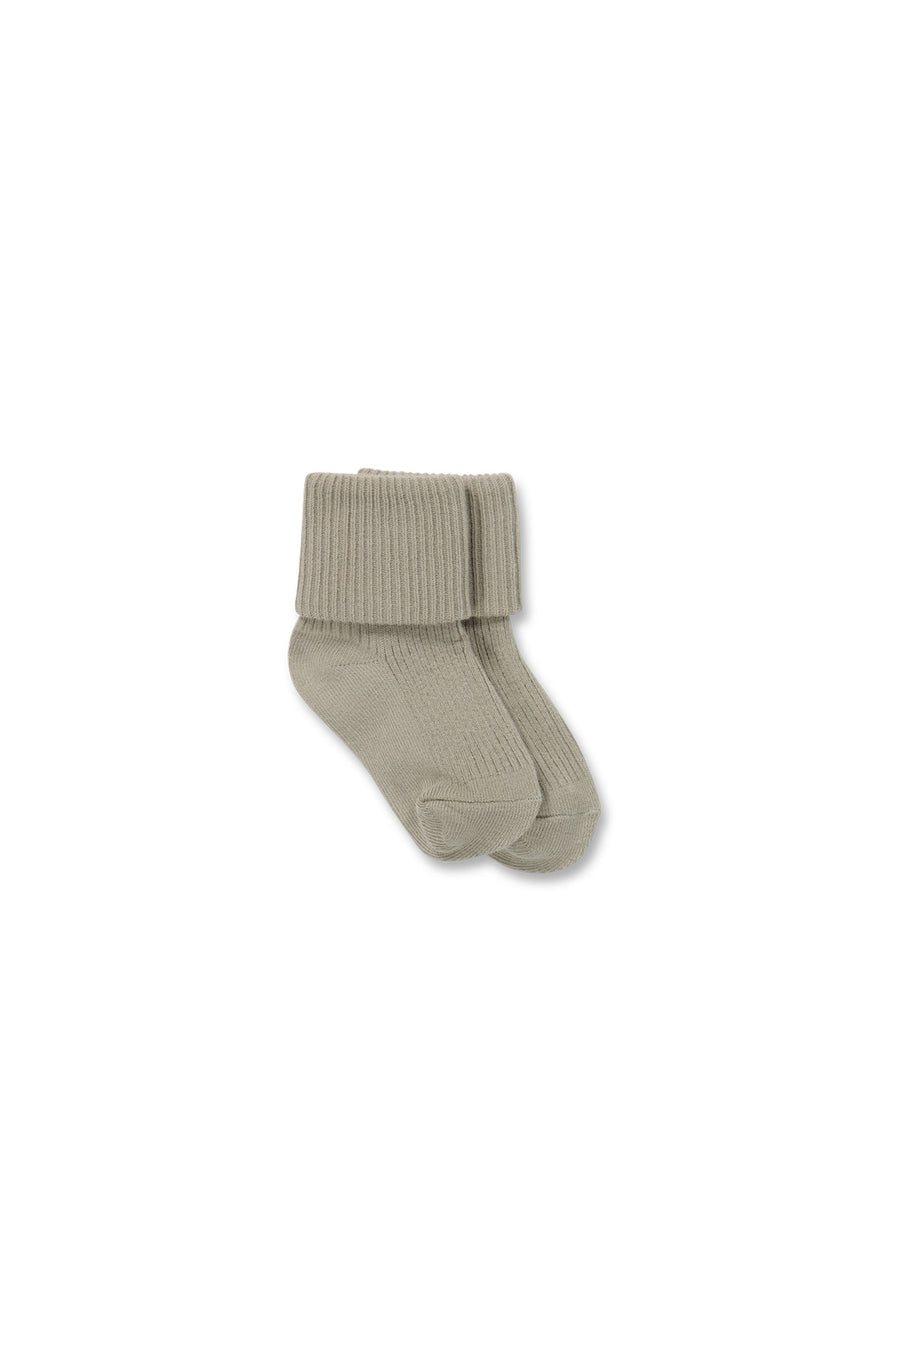 Classic Rib Sock - Shale Grey Childrens Sock from Jamie Kay NZ